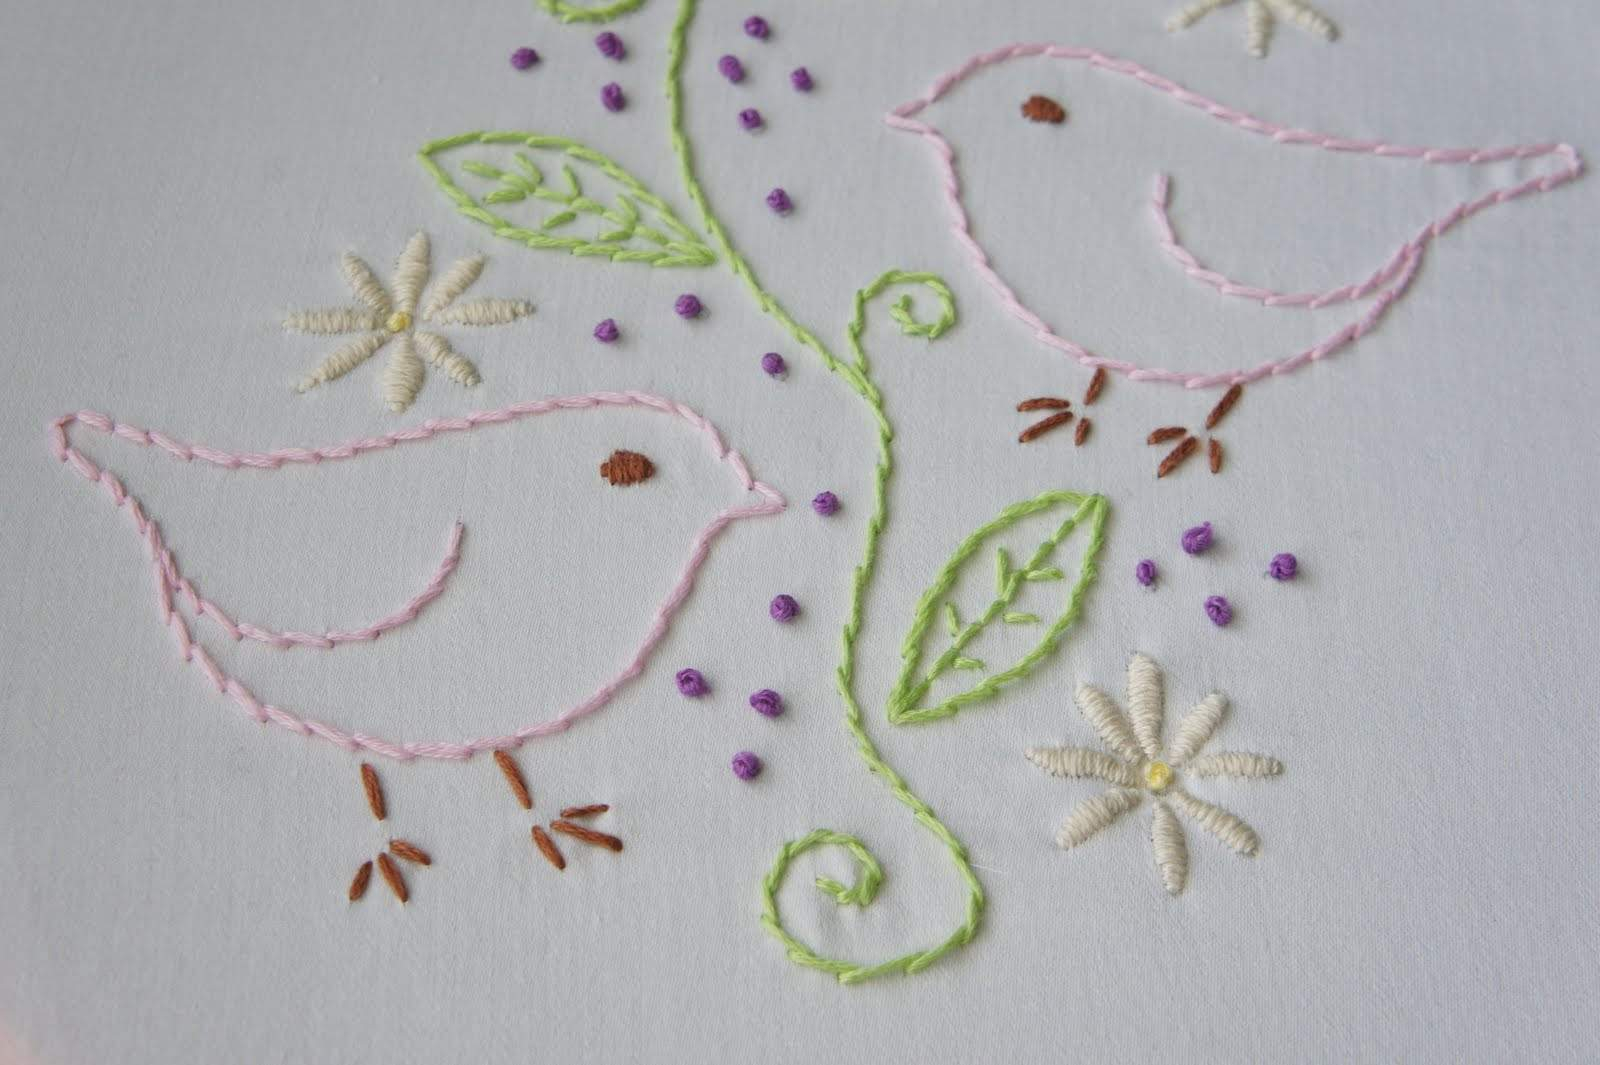 Free Hand Embroidery Patterns New Hand Stitch Embroidery Patterns Free Embroidery Patterns Hand